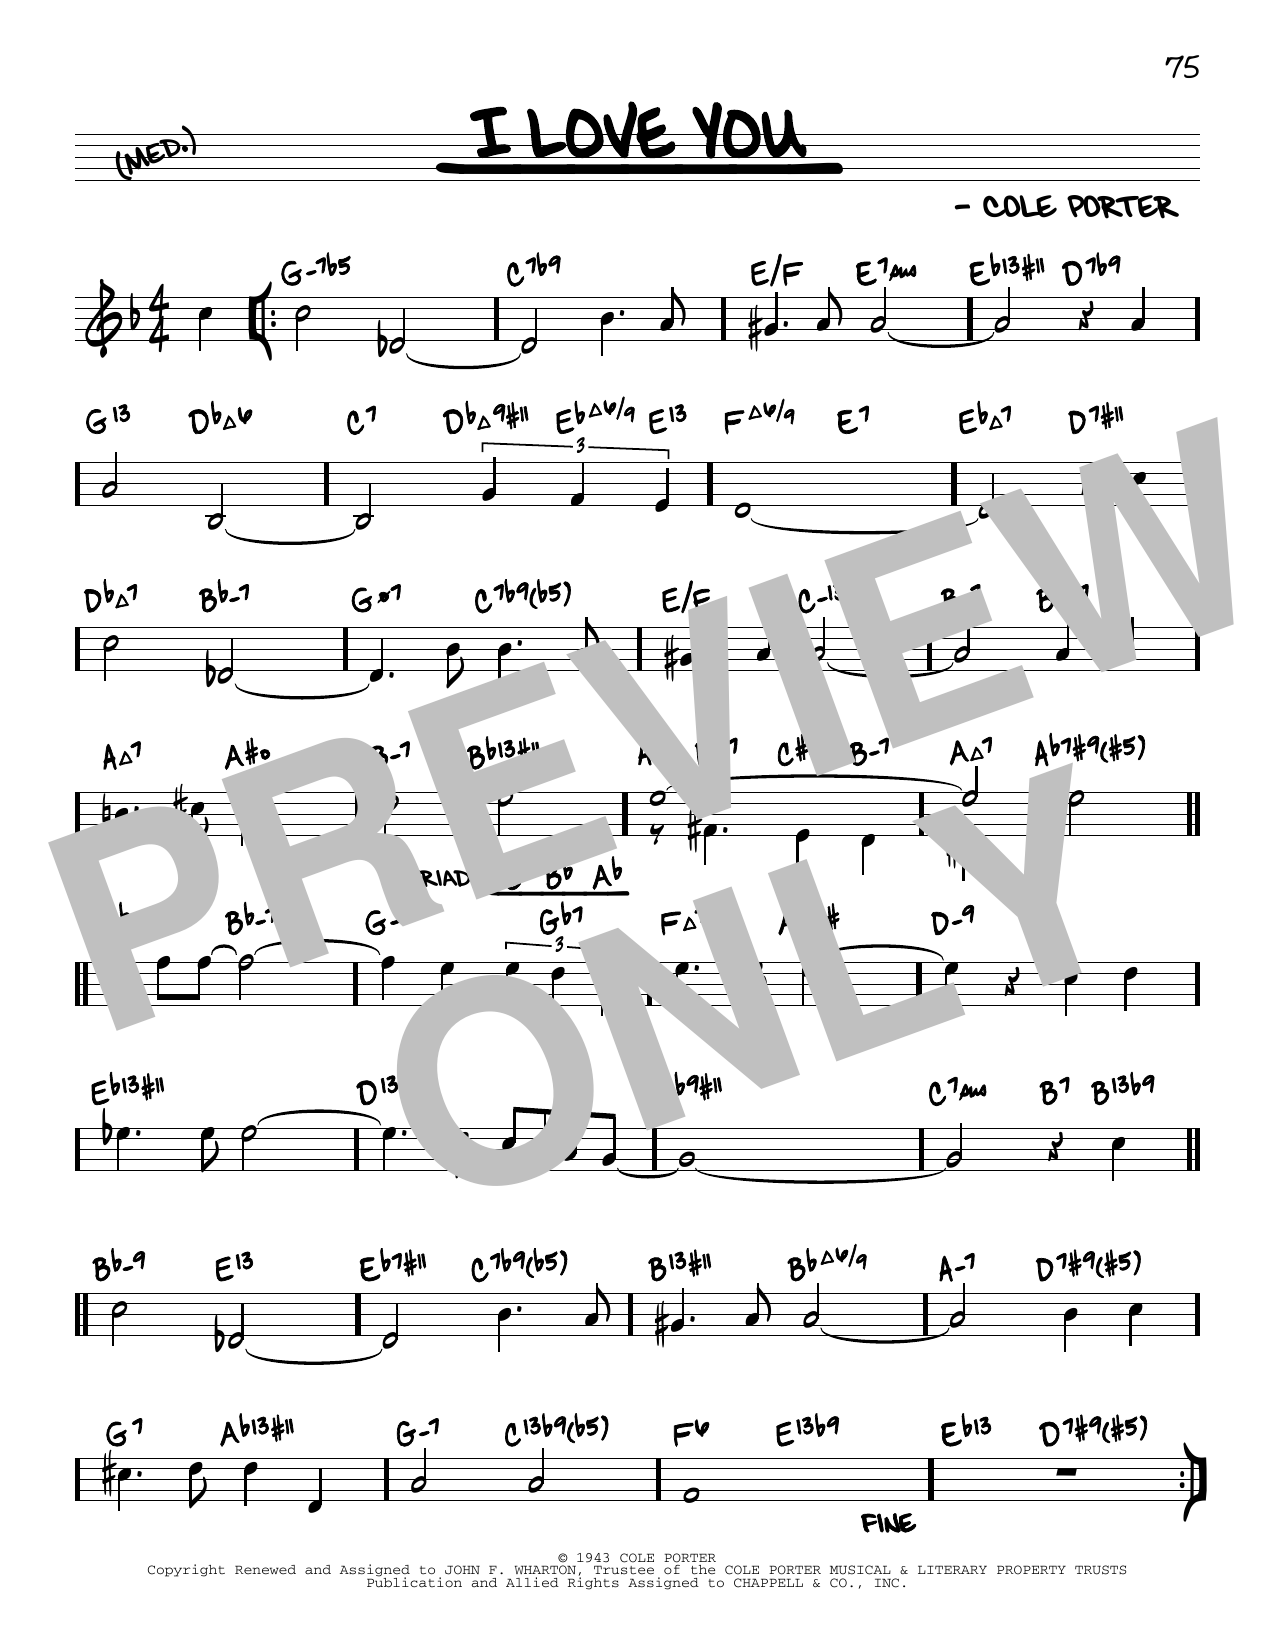 Cole Porter I Love You (arr. David Hazeltine) Sheet Music Notes & Chords for Real Book – Enhanced Chords - Download or Print PDF